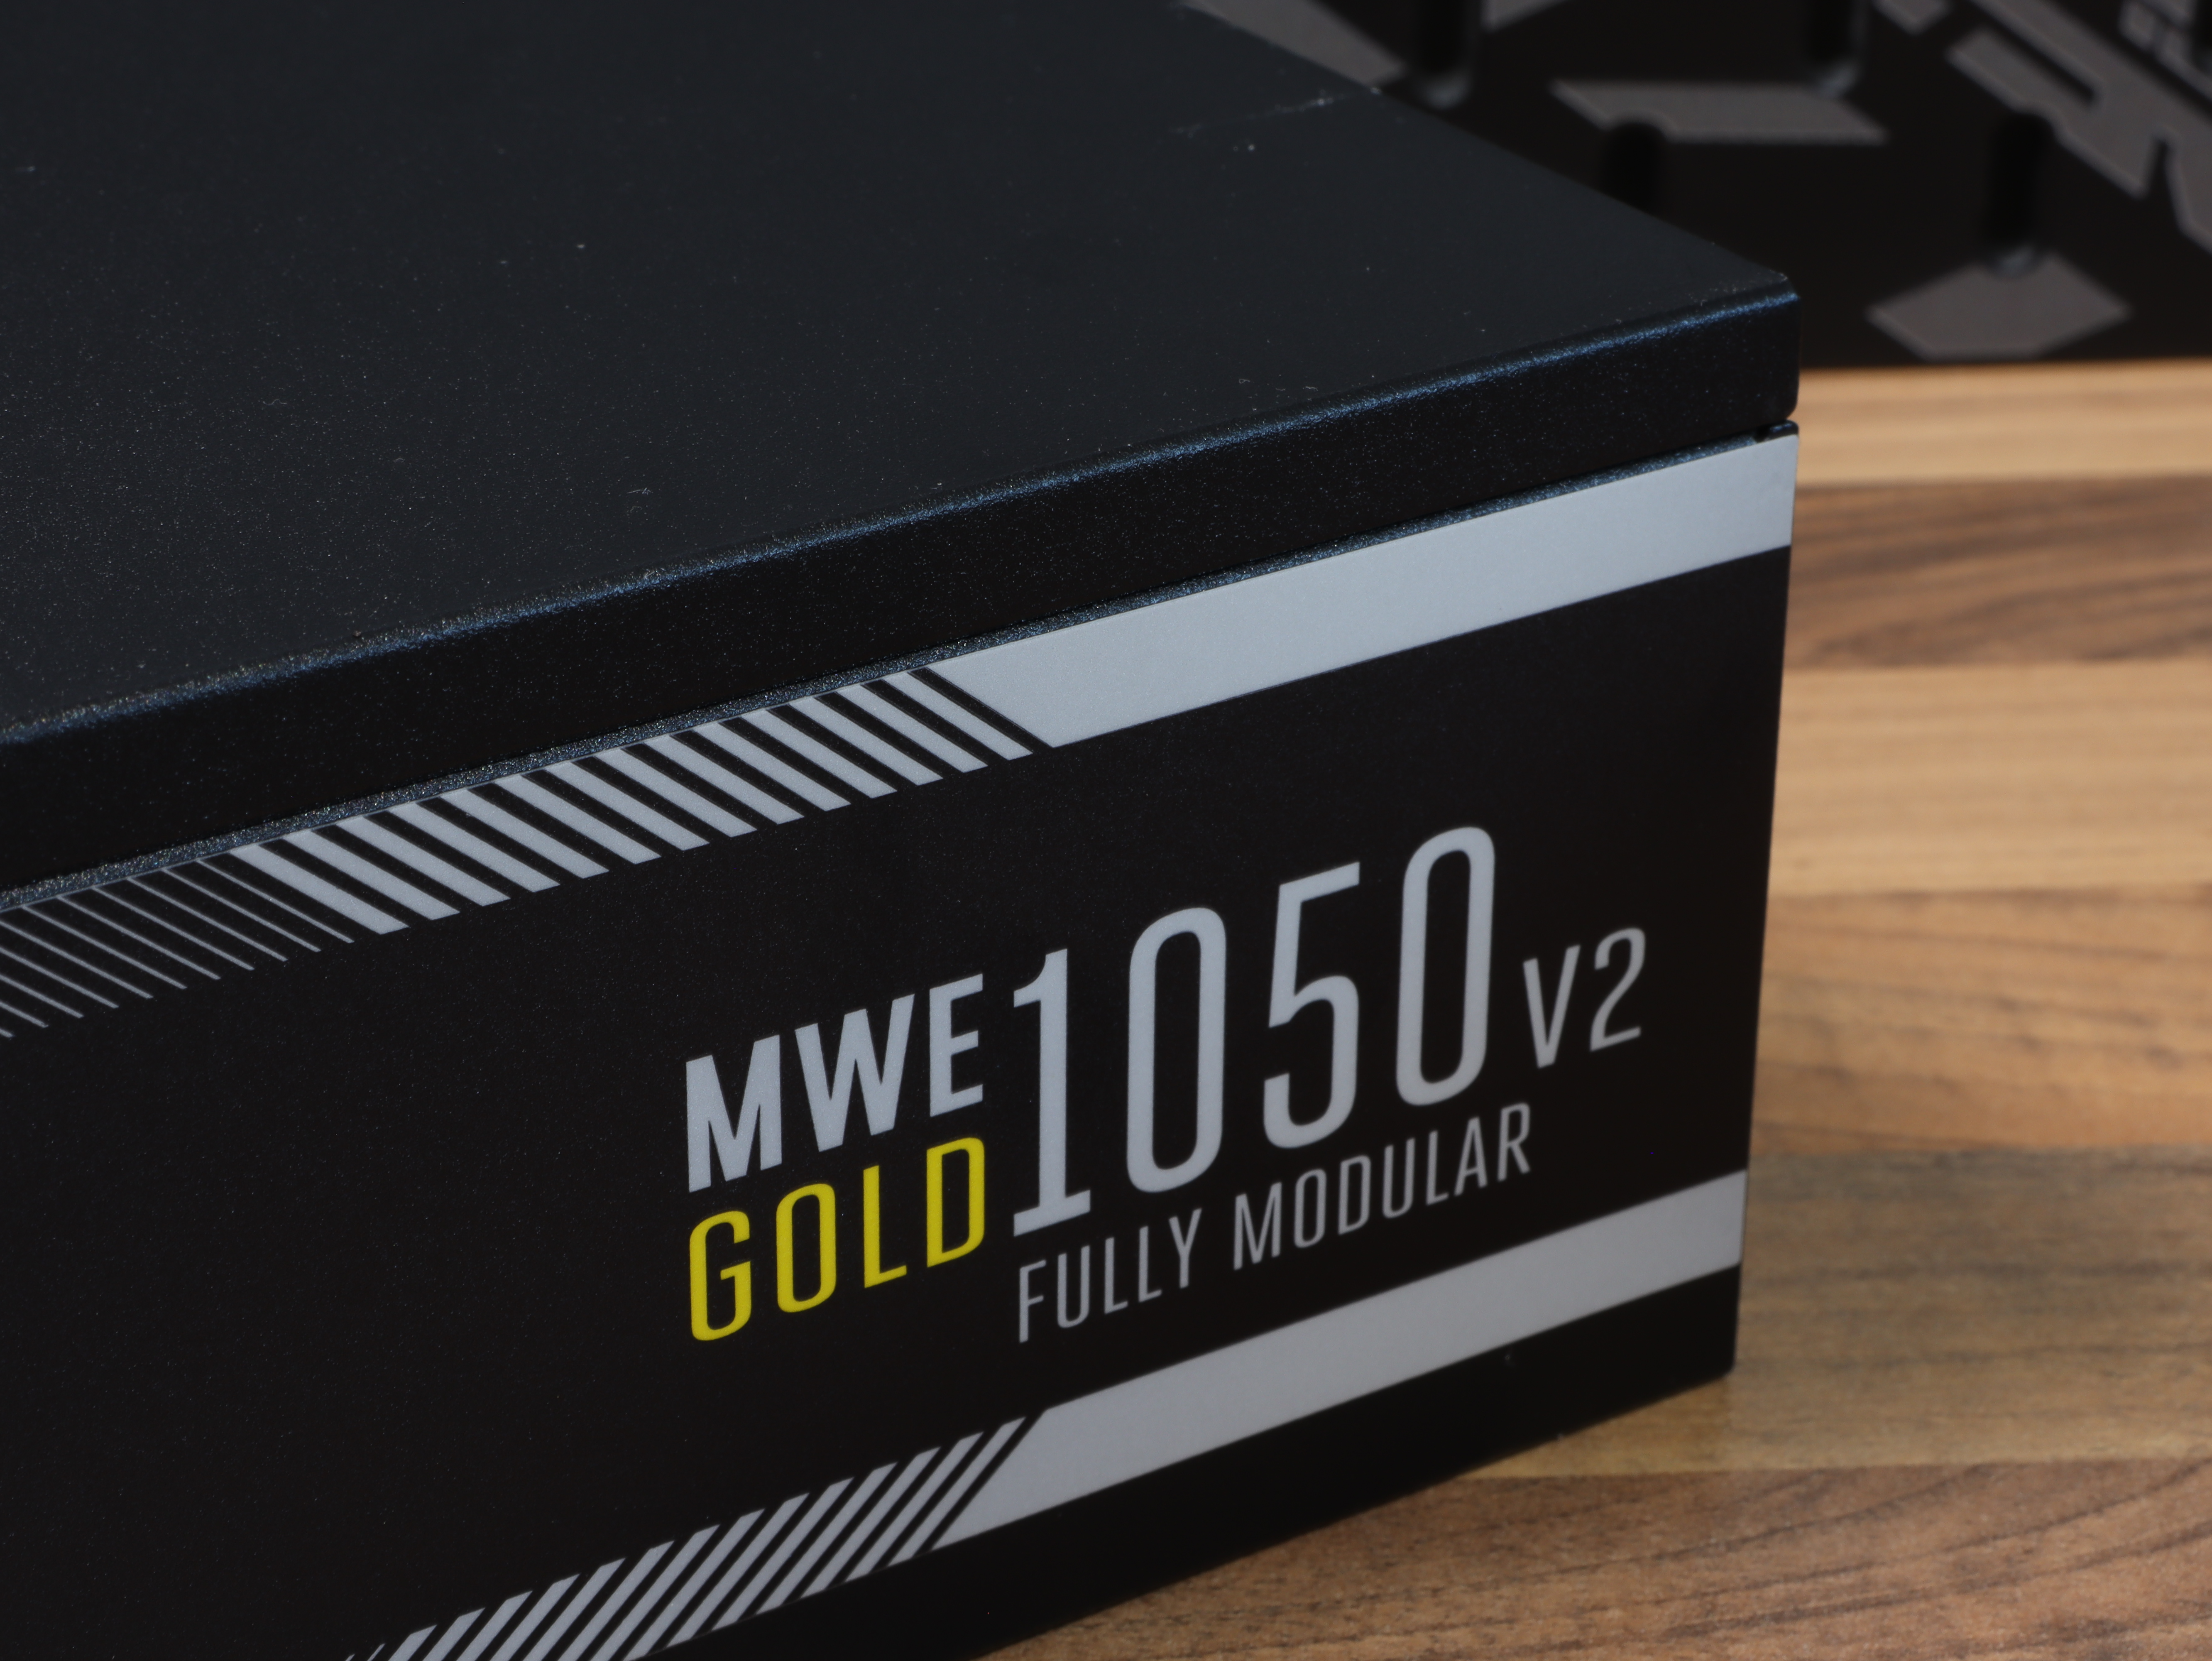 MWE Gold 750 V2 ATX 3.0 Ready